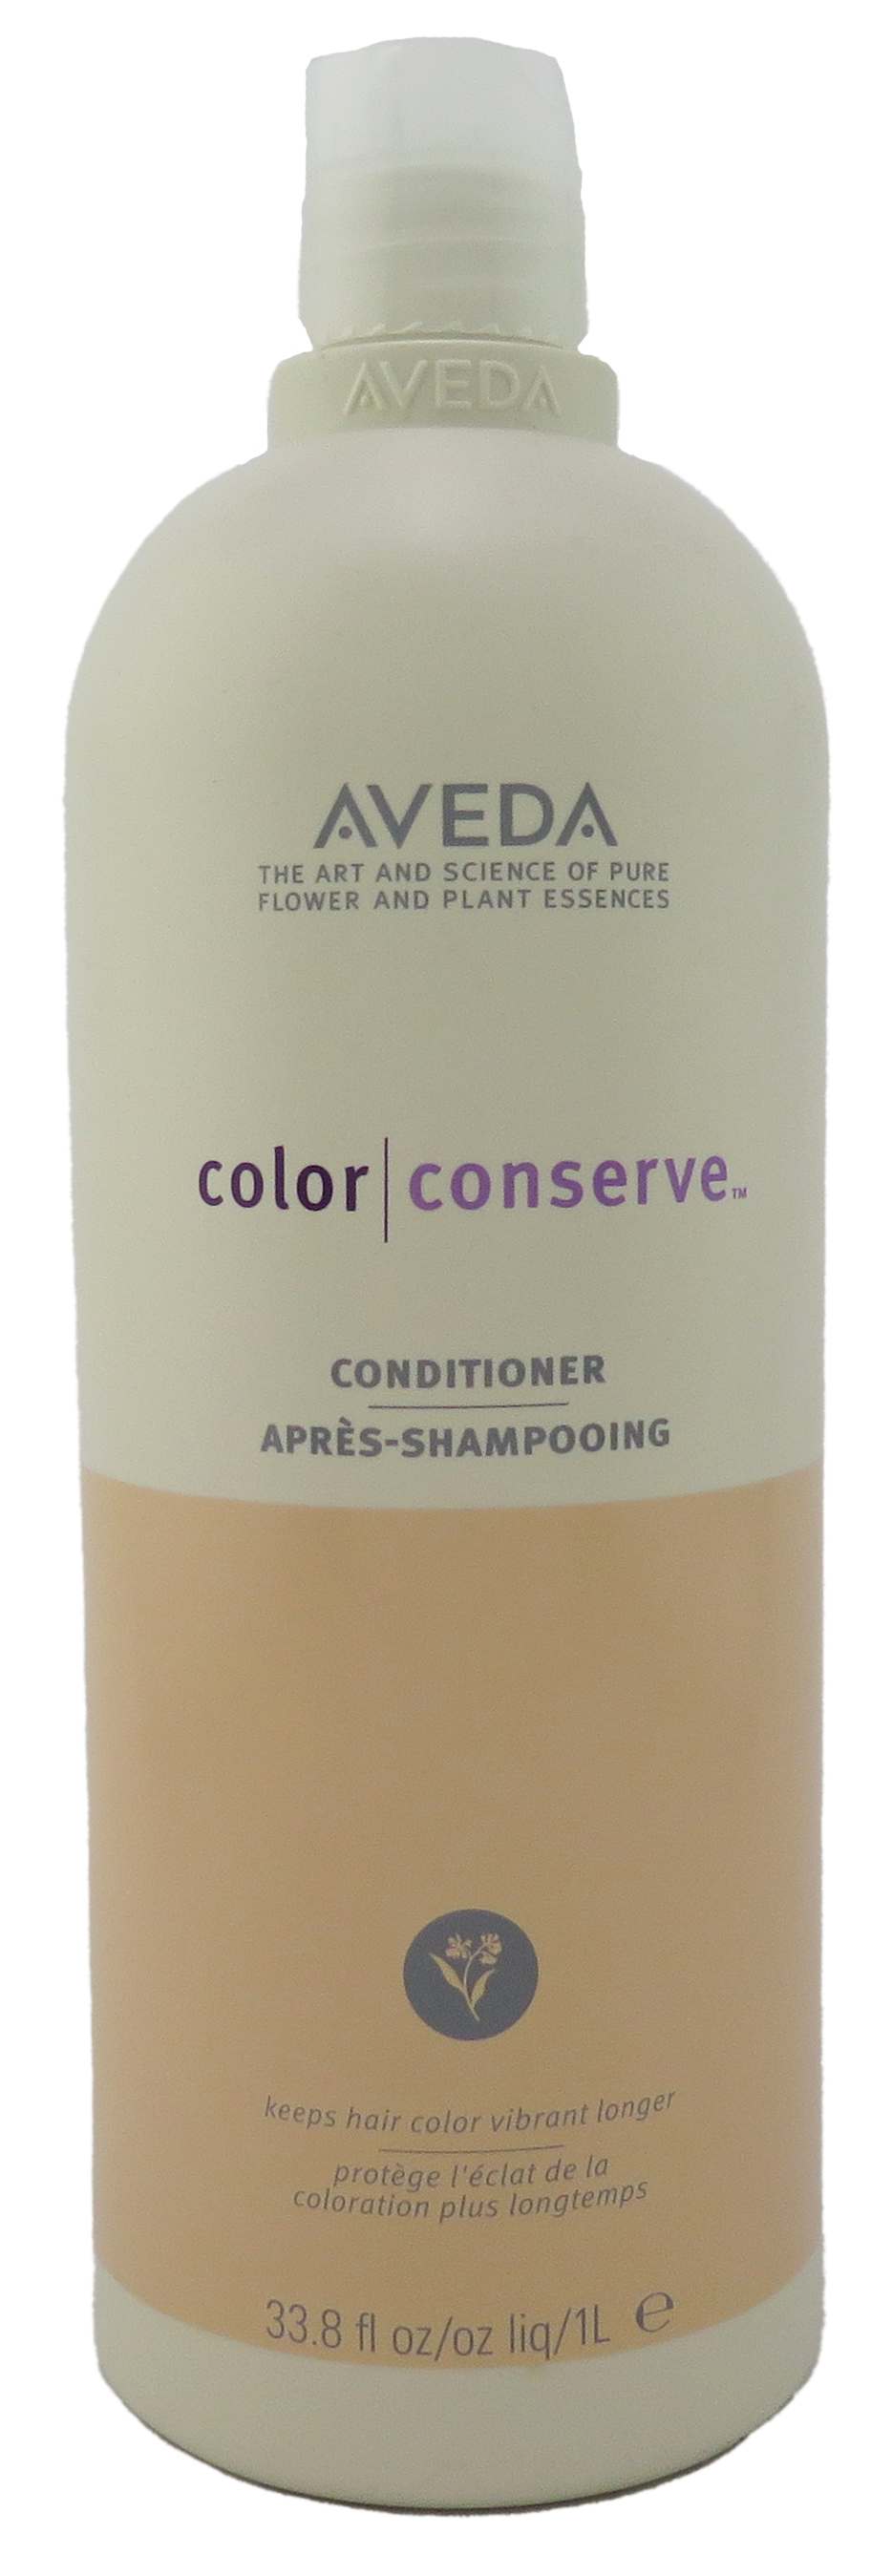 Aveda Color Conserve Conditioner 33.8 Fl oz